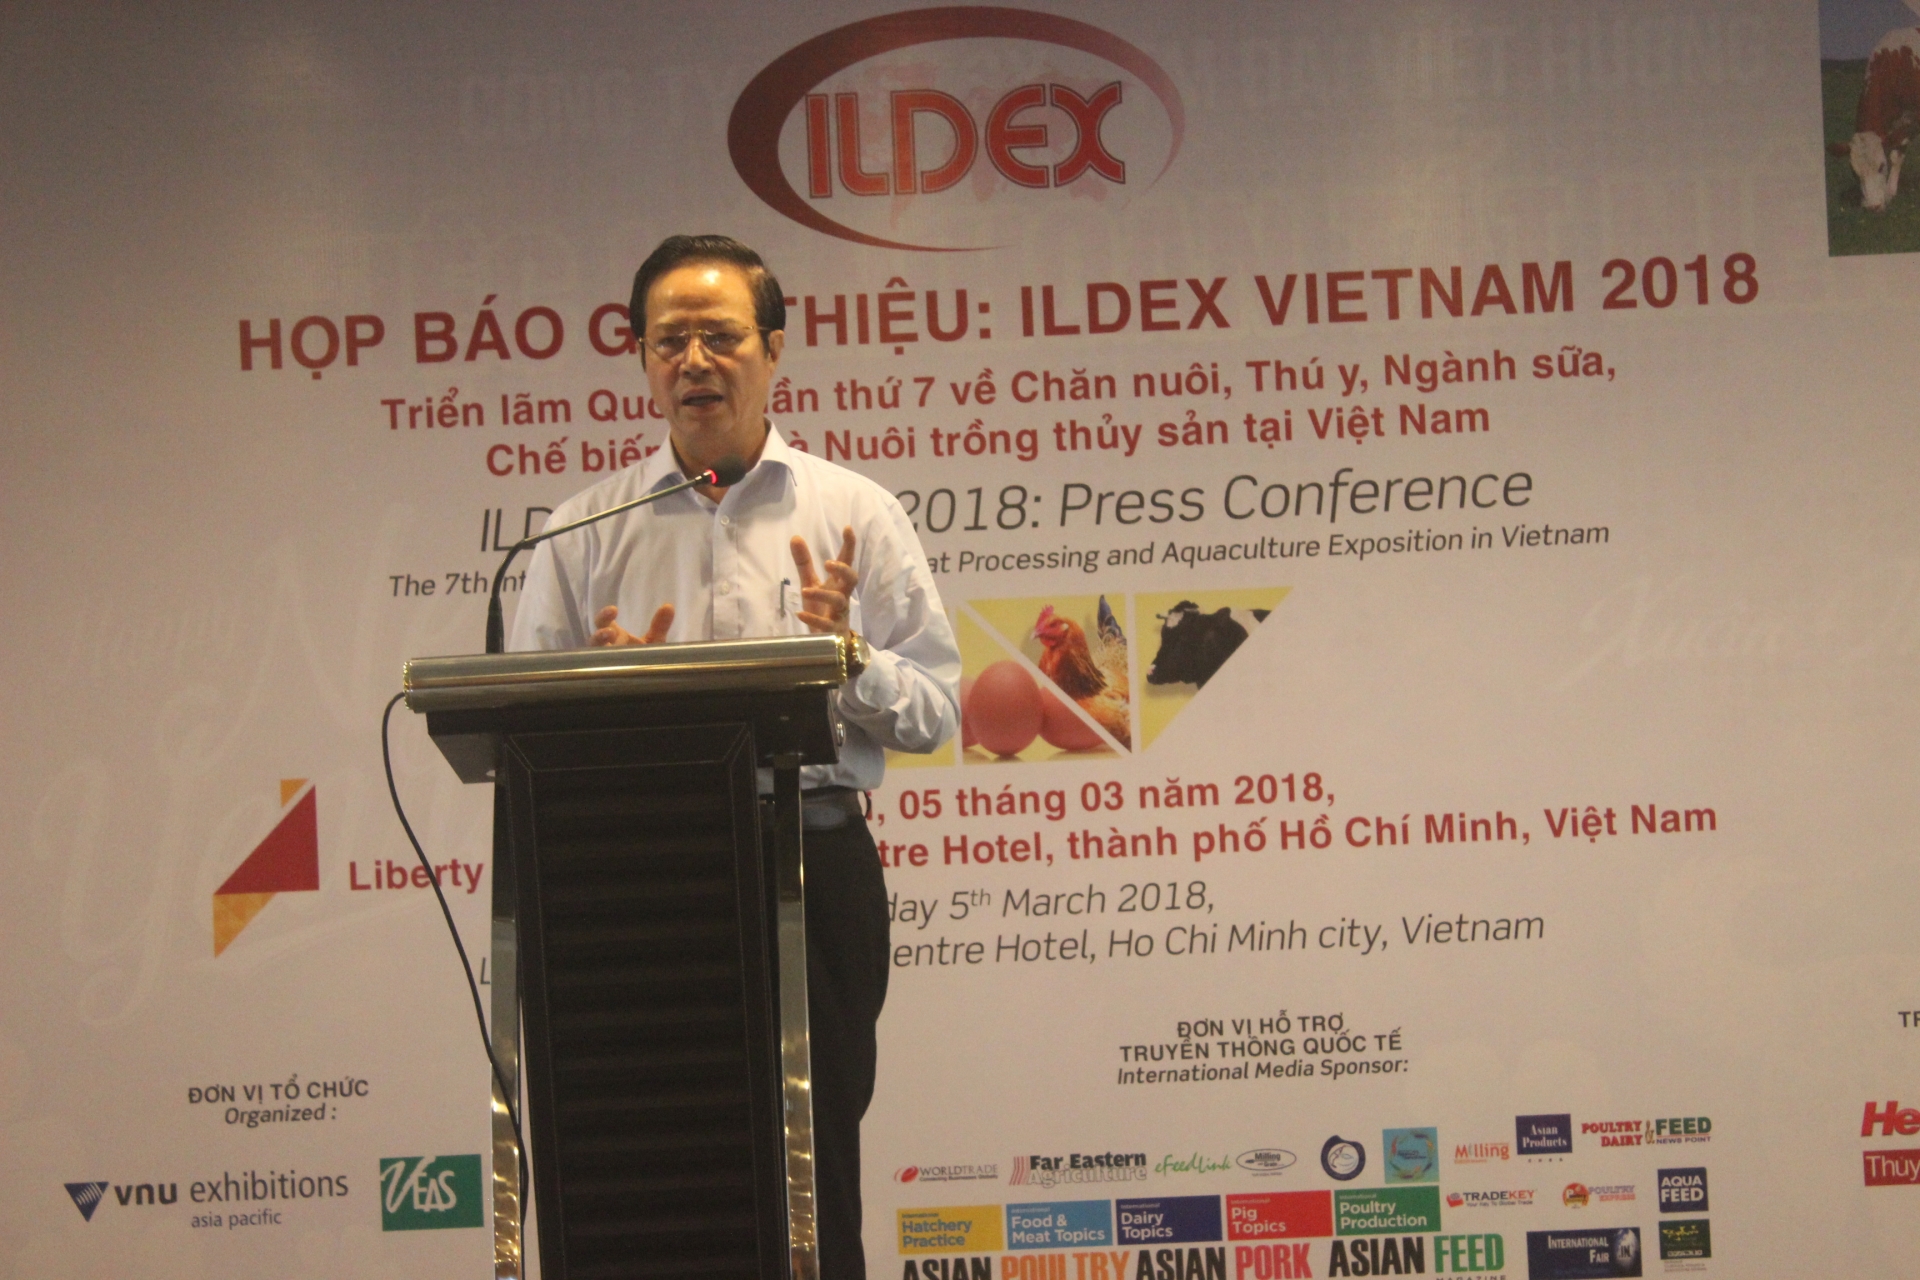 Over 280 companies will join ILDEX Vietnam 2018